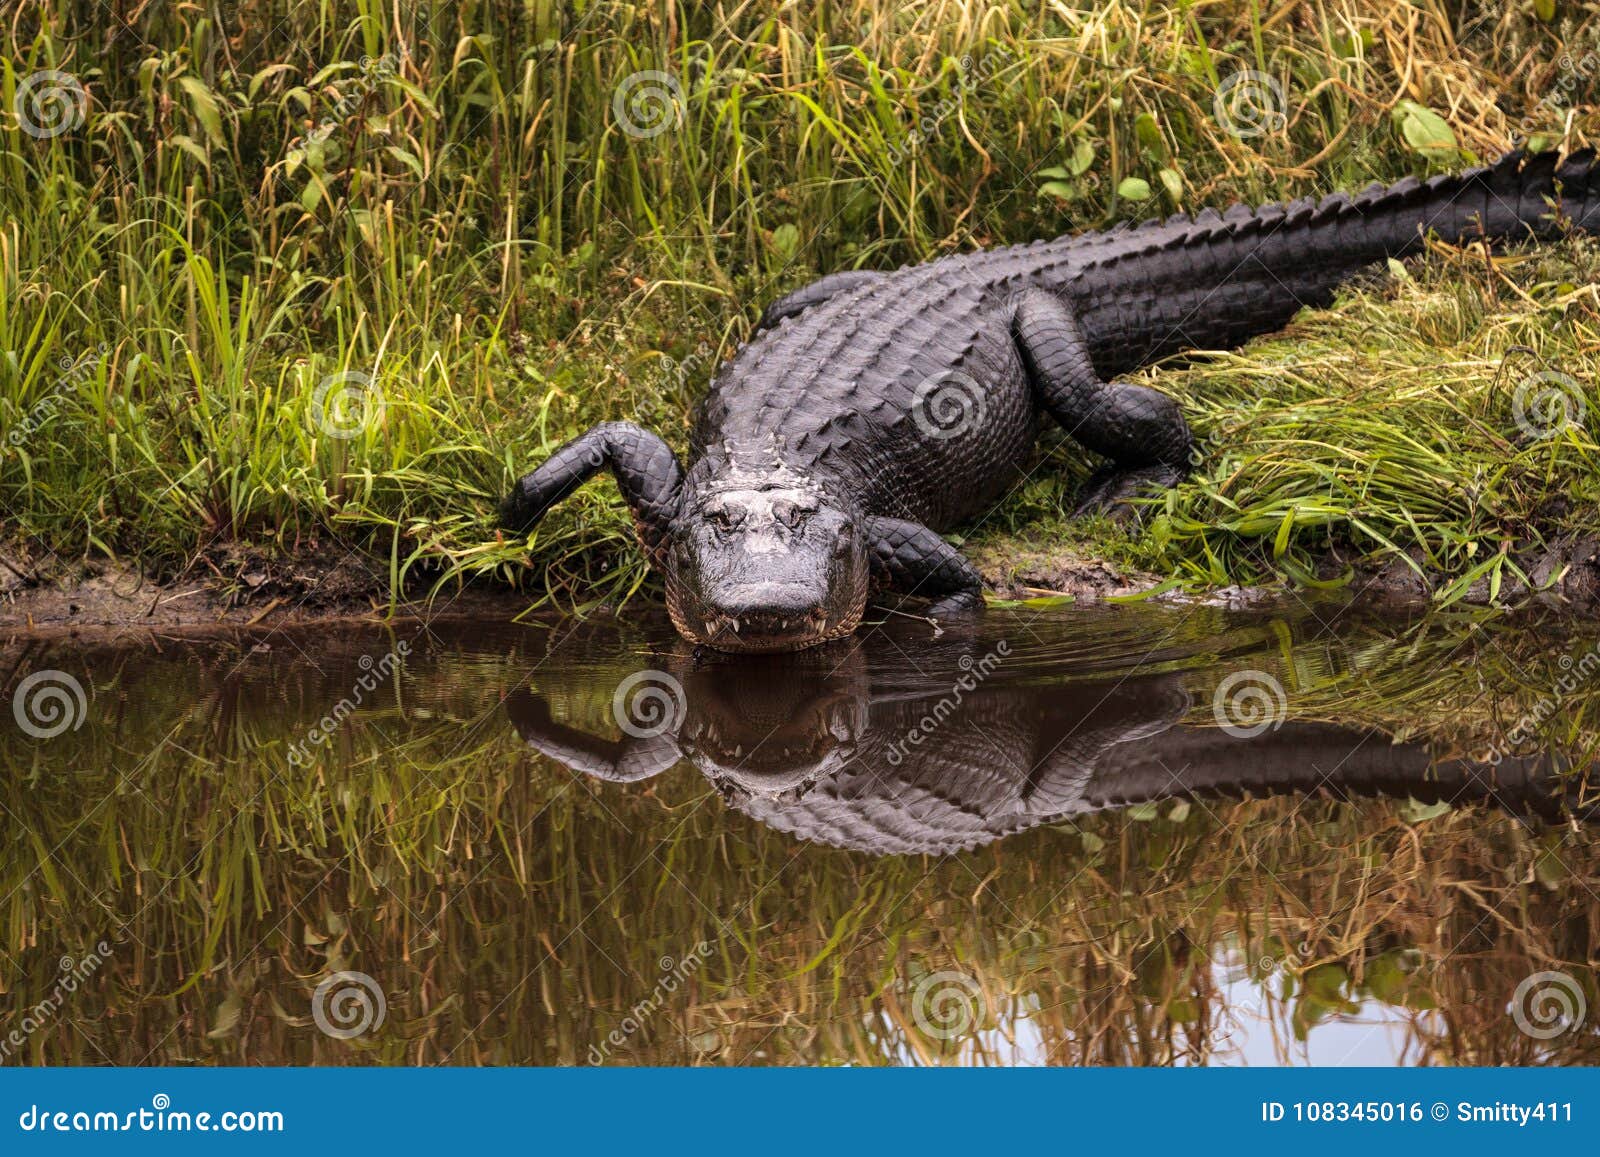 large menacing american alligator alligator mississippiensis